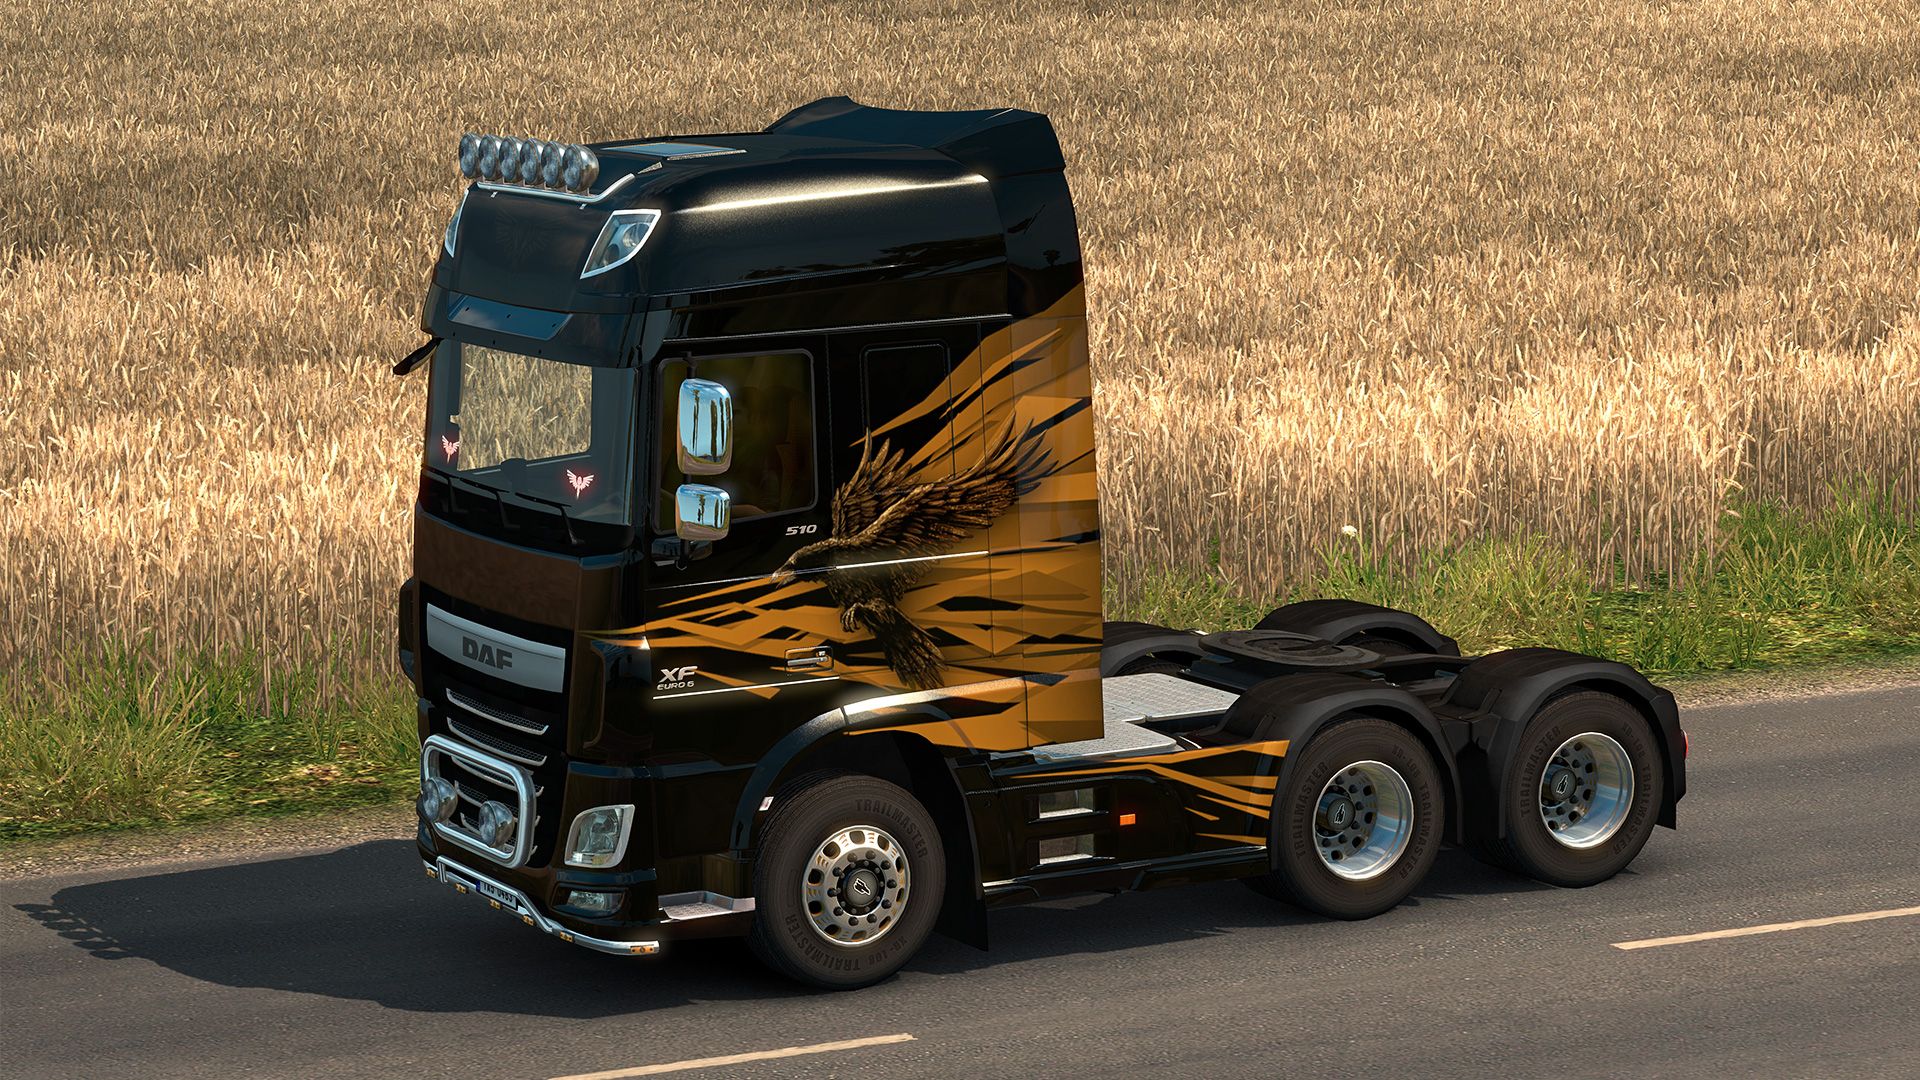 Euro Truck Simulator 2 - Raven Truck Design Pack